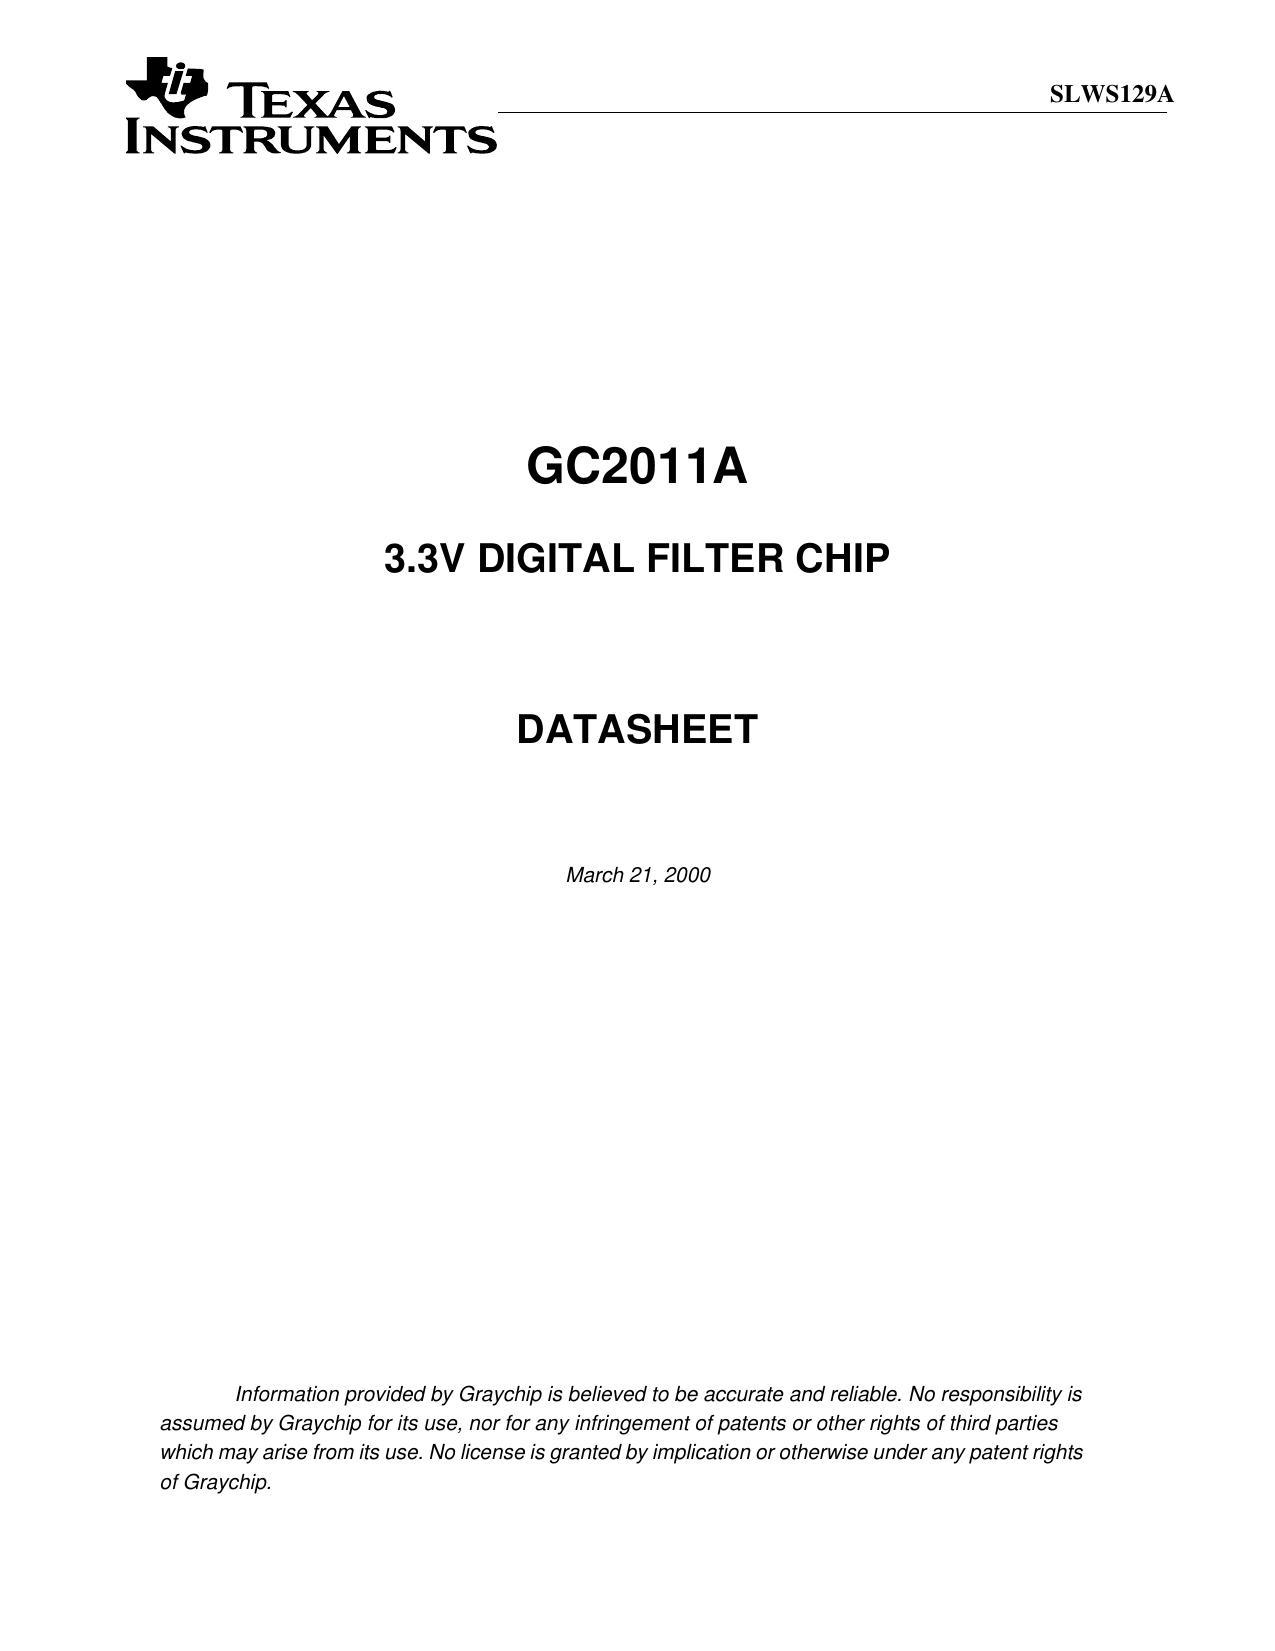 gc2011a-33v-digital-filter-chip-datasheet.pdf